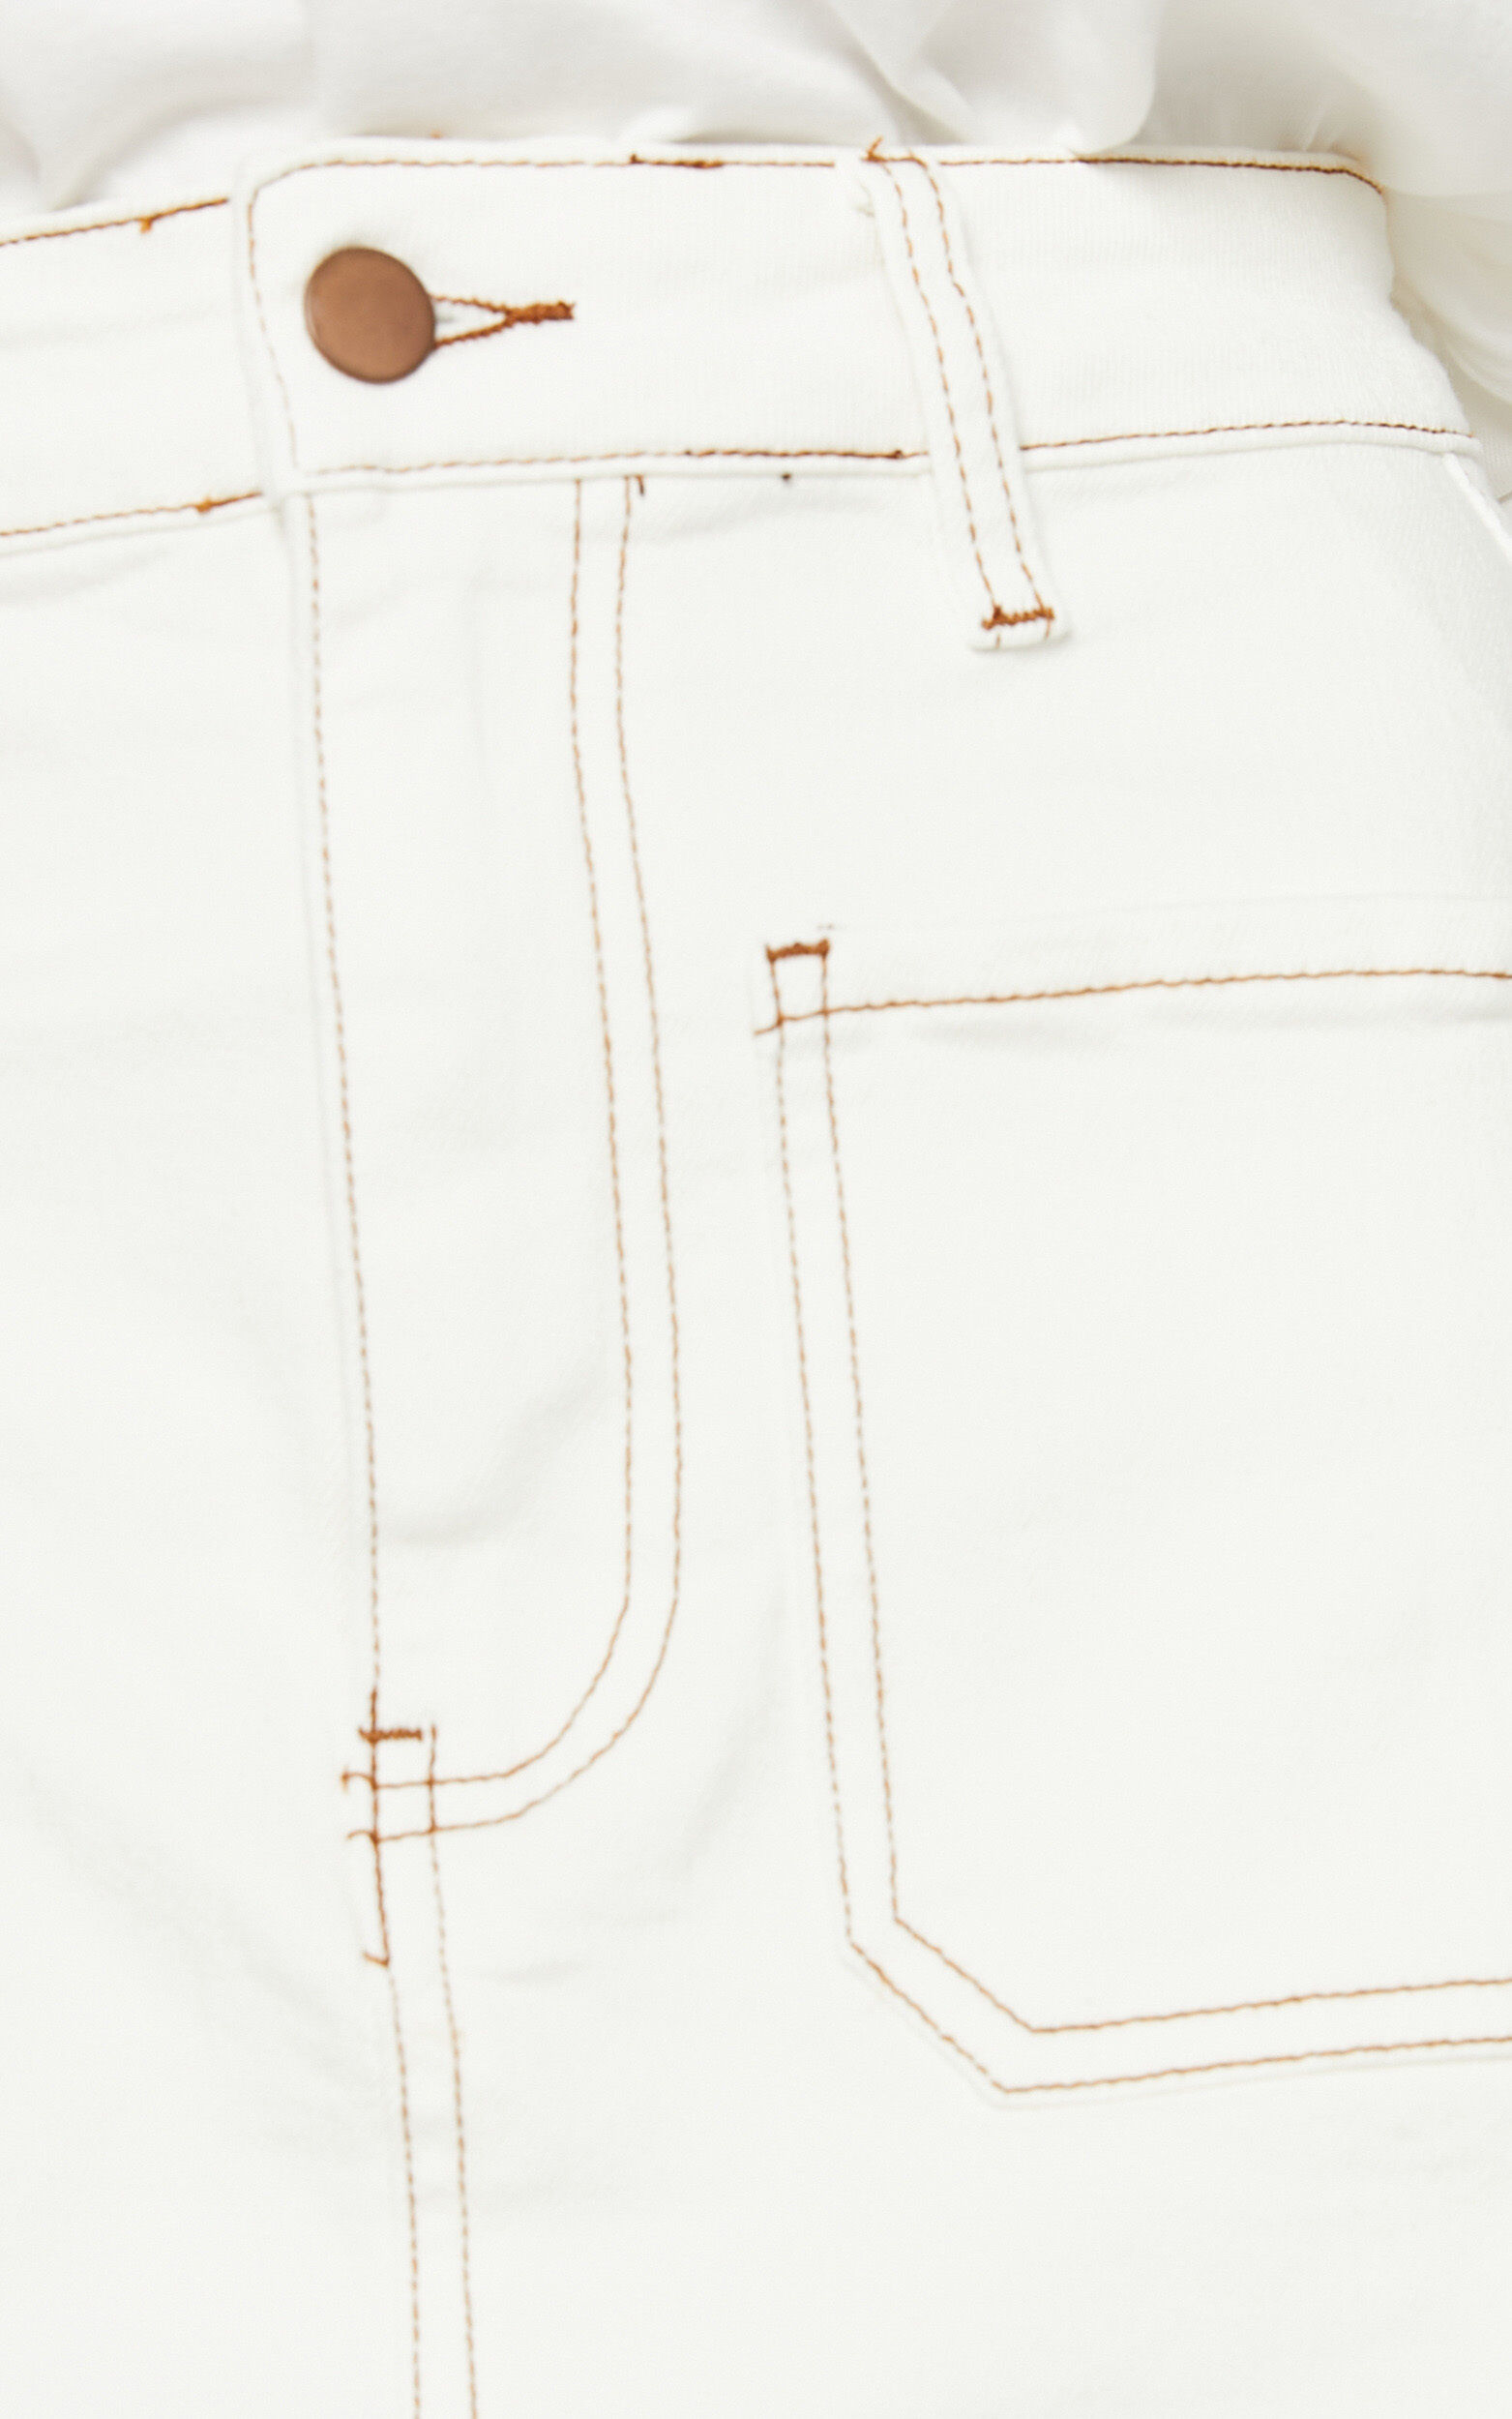 Showpo | Malcolm Jeans - Mid Rise Contrast Stitch Flared Denim Jeans in White Denim